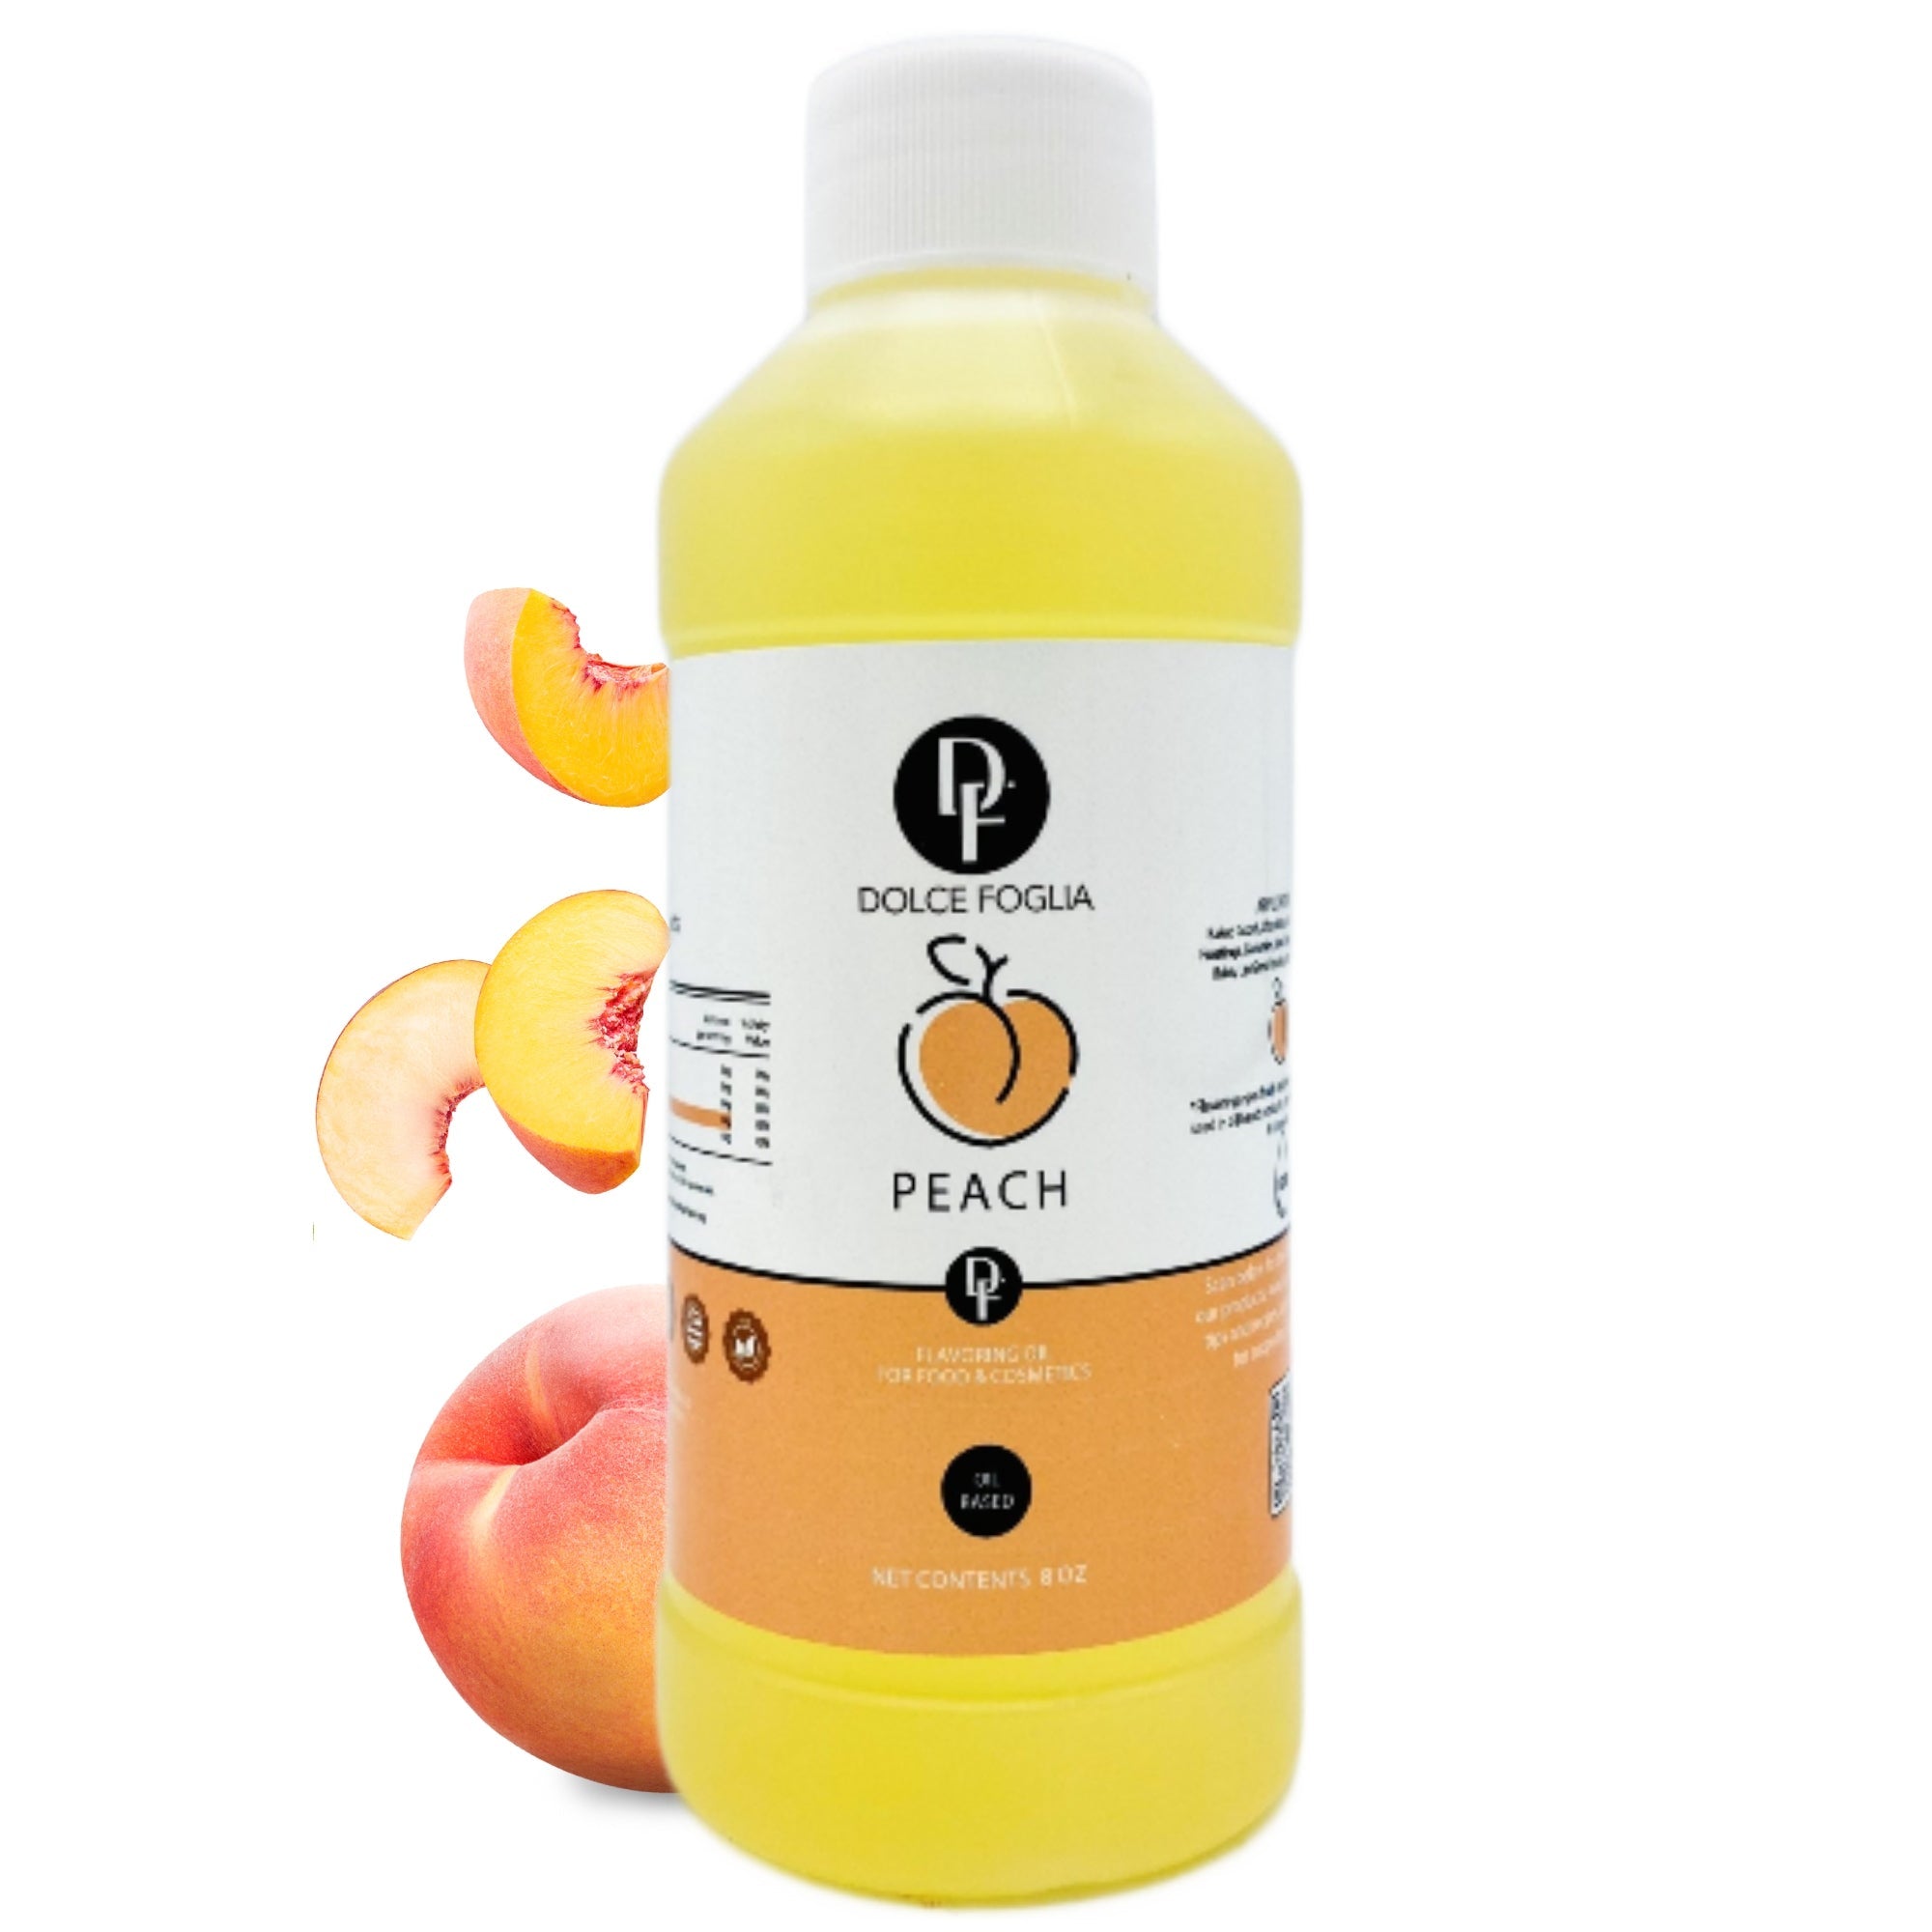  Dolce Foglia Orange Creamsicle Flavoring Oils - 8 Oz